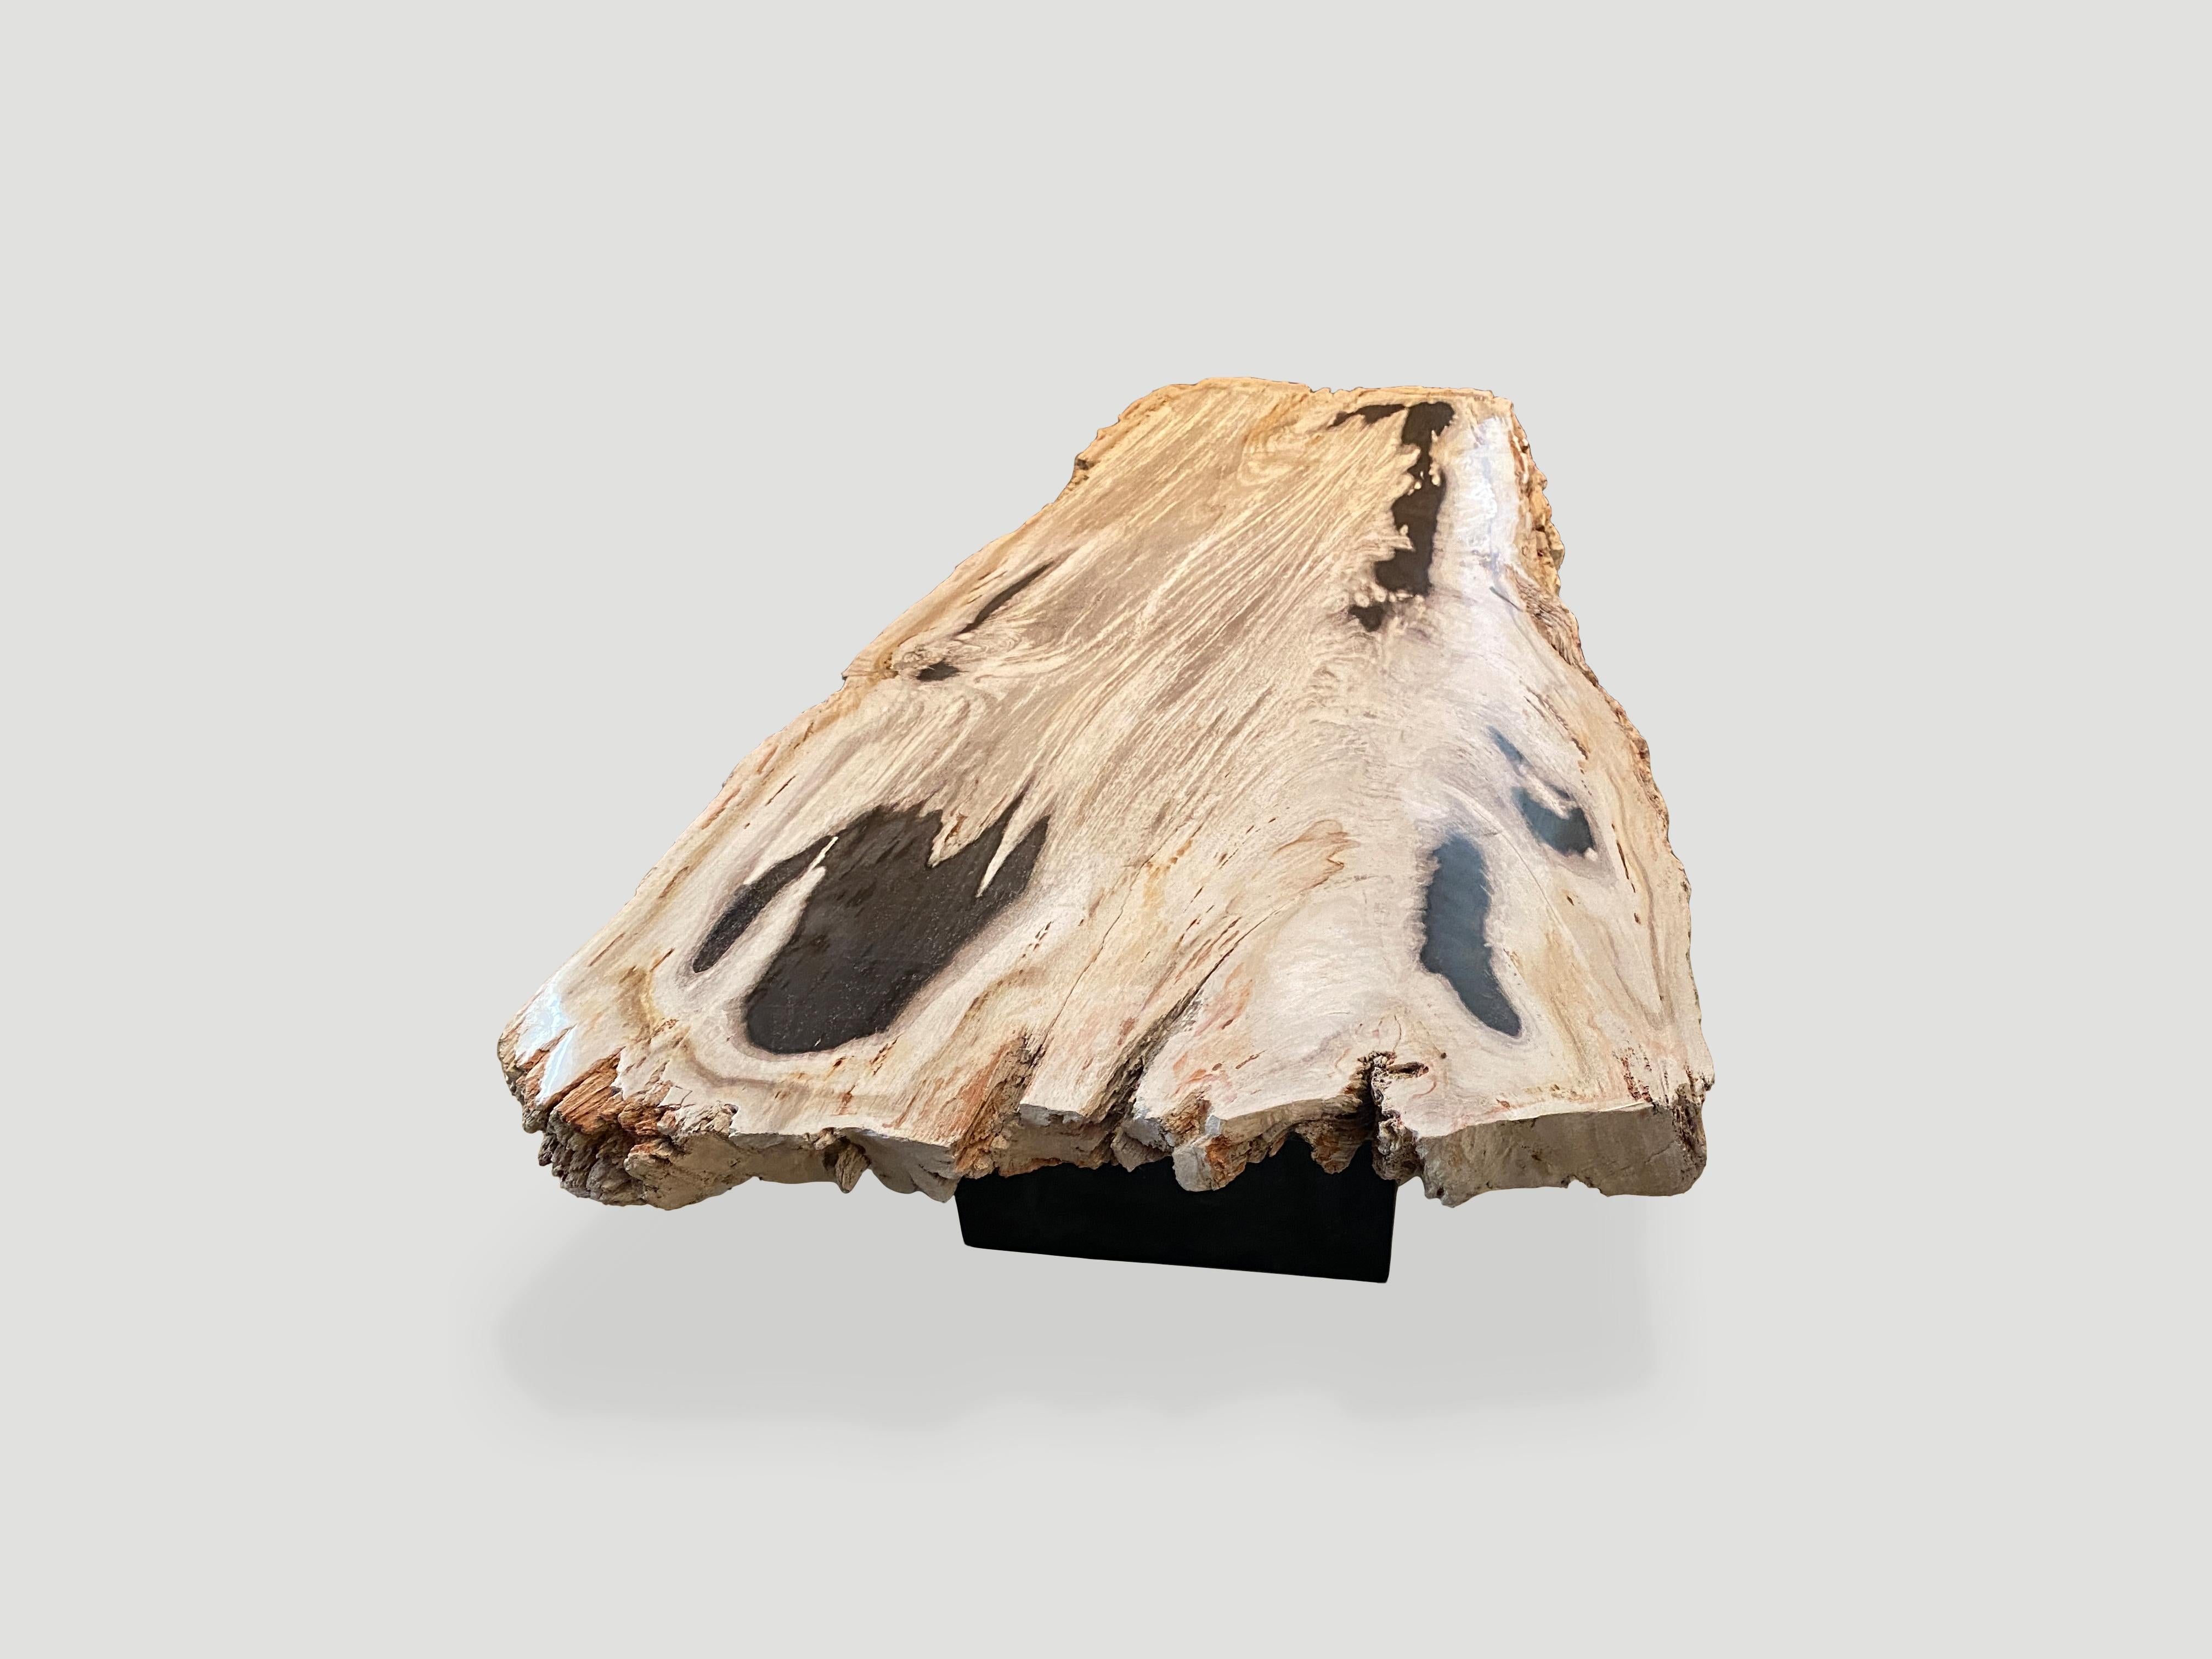 Contemporary Andrianna Shamaris Petrified Wood Live Edge Coffee Table or Console